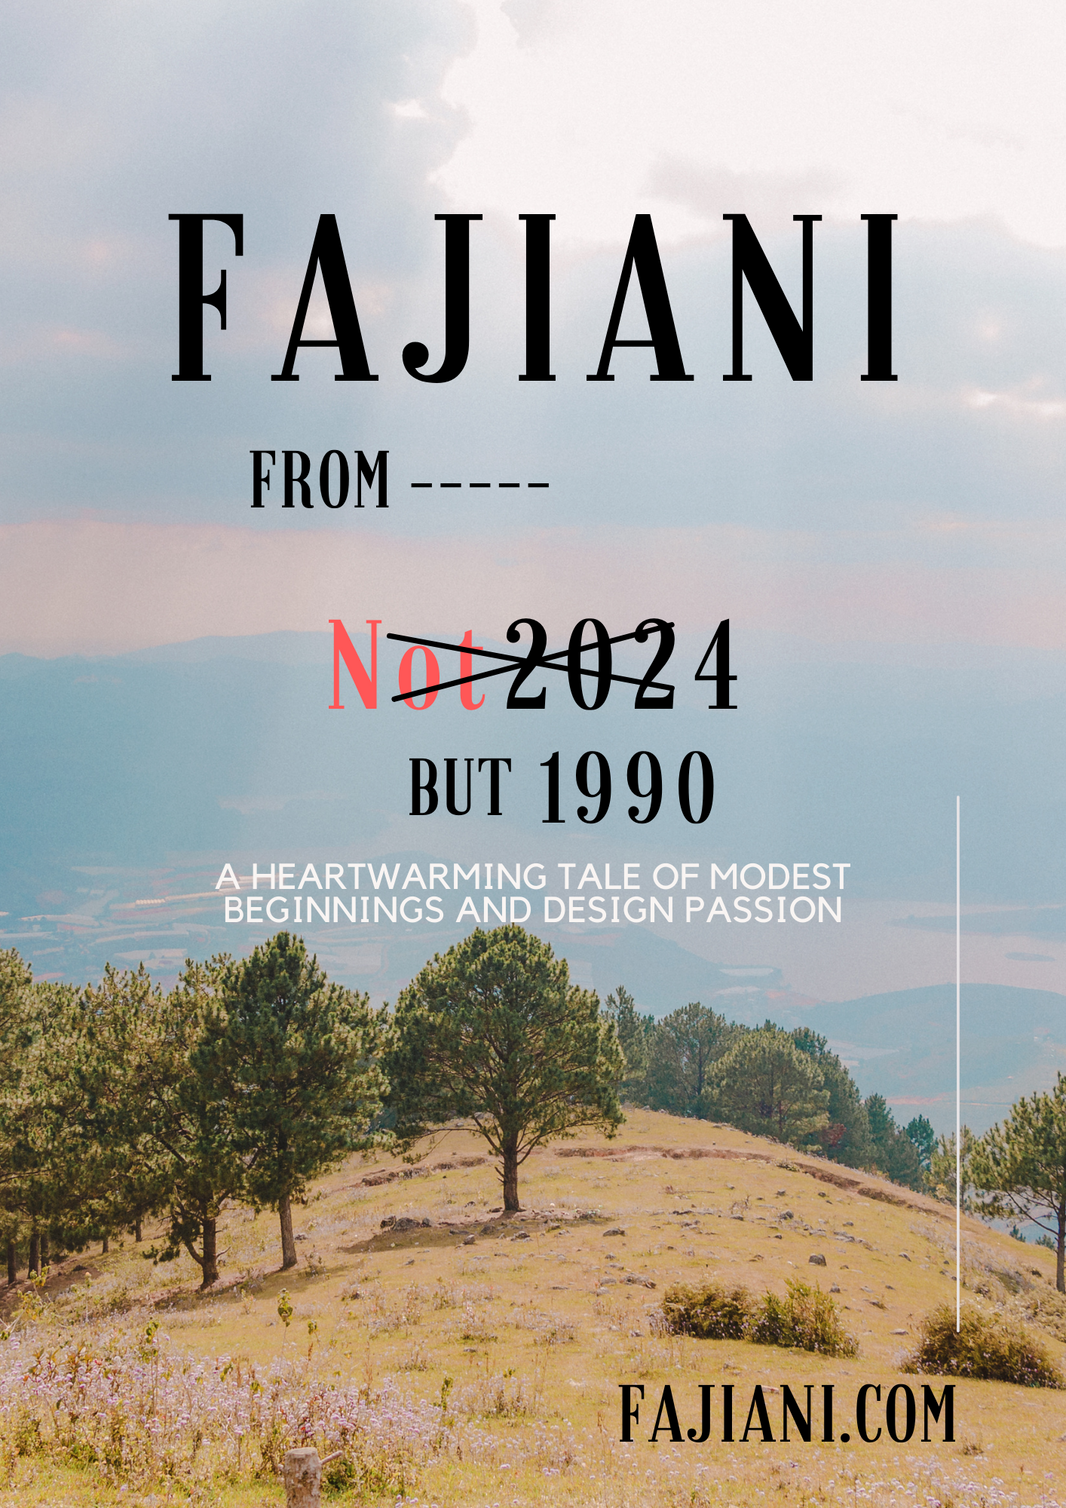 Fajiani: A Tale of Modest Origins and Design Passion